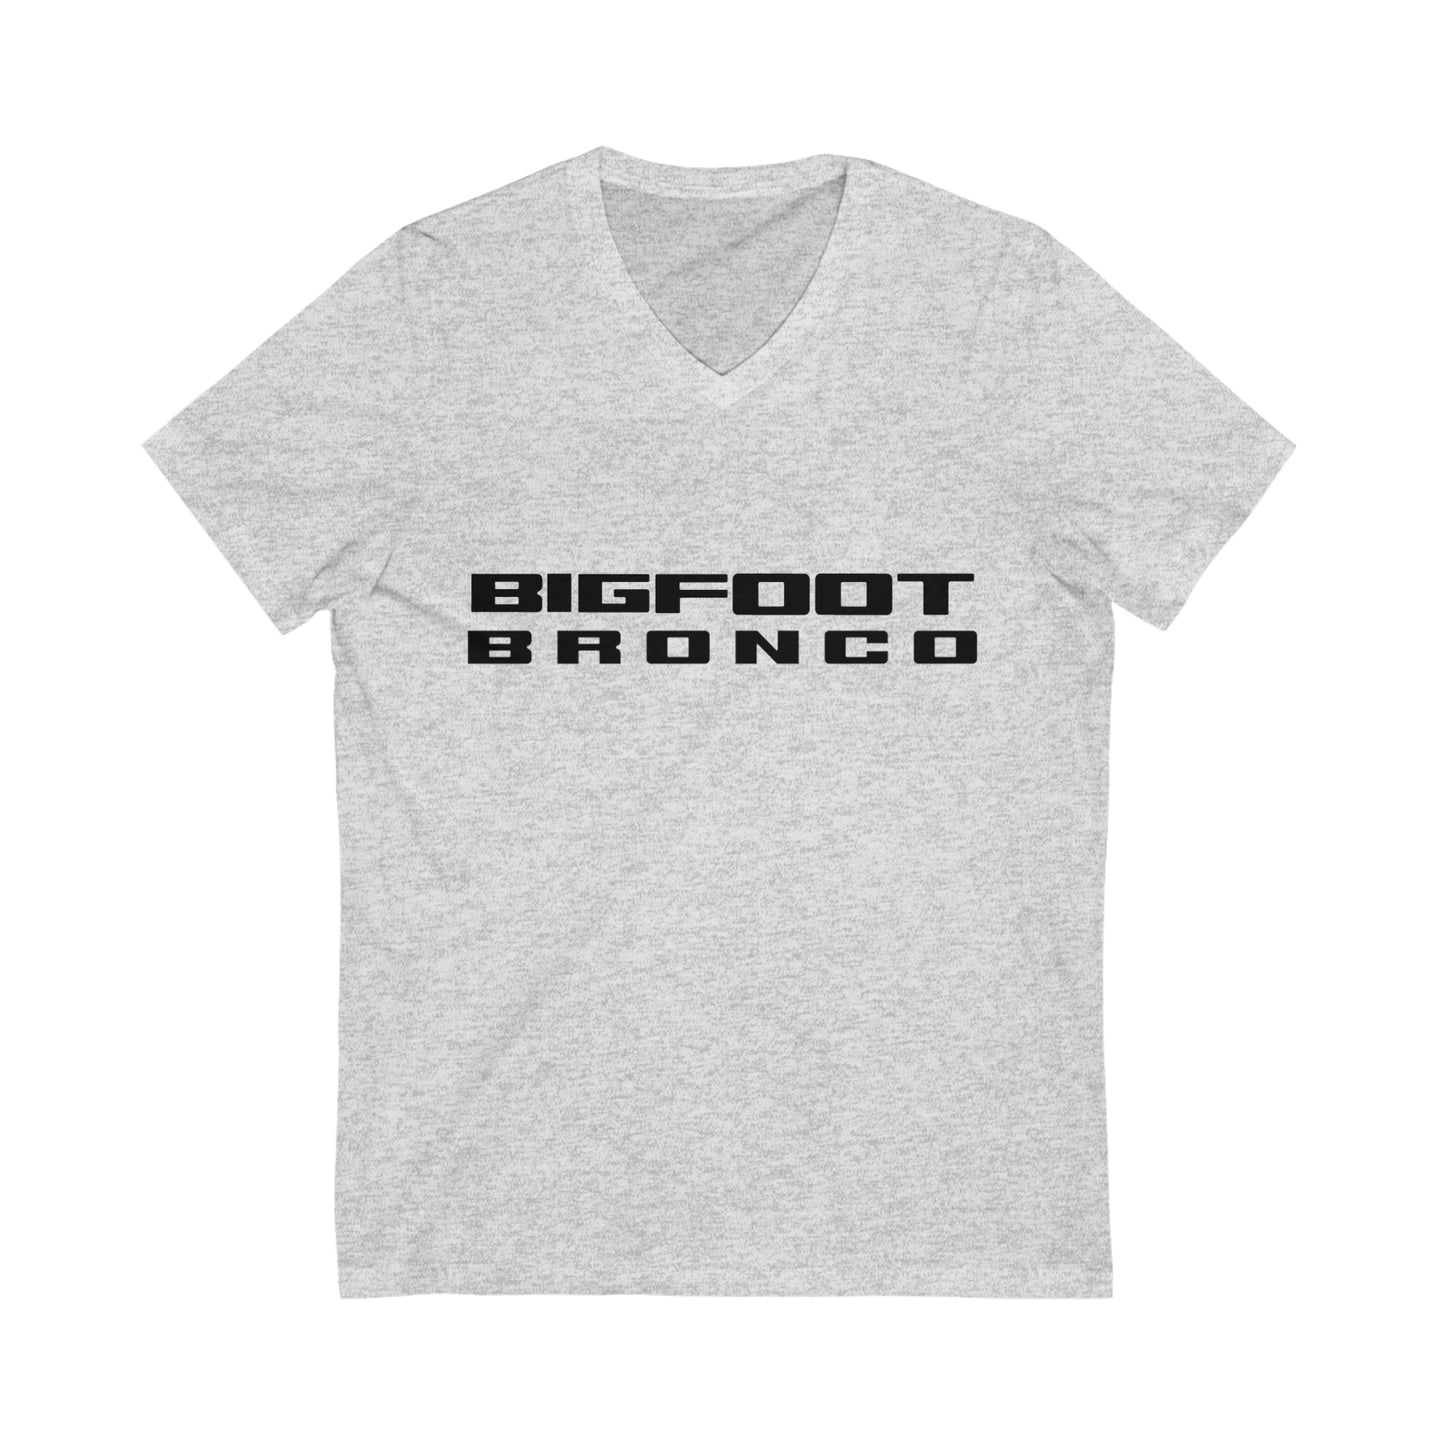 Bigfoot Bronco™ V-Neck Tee